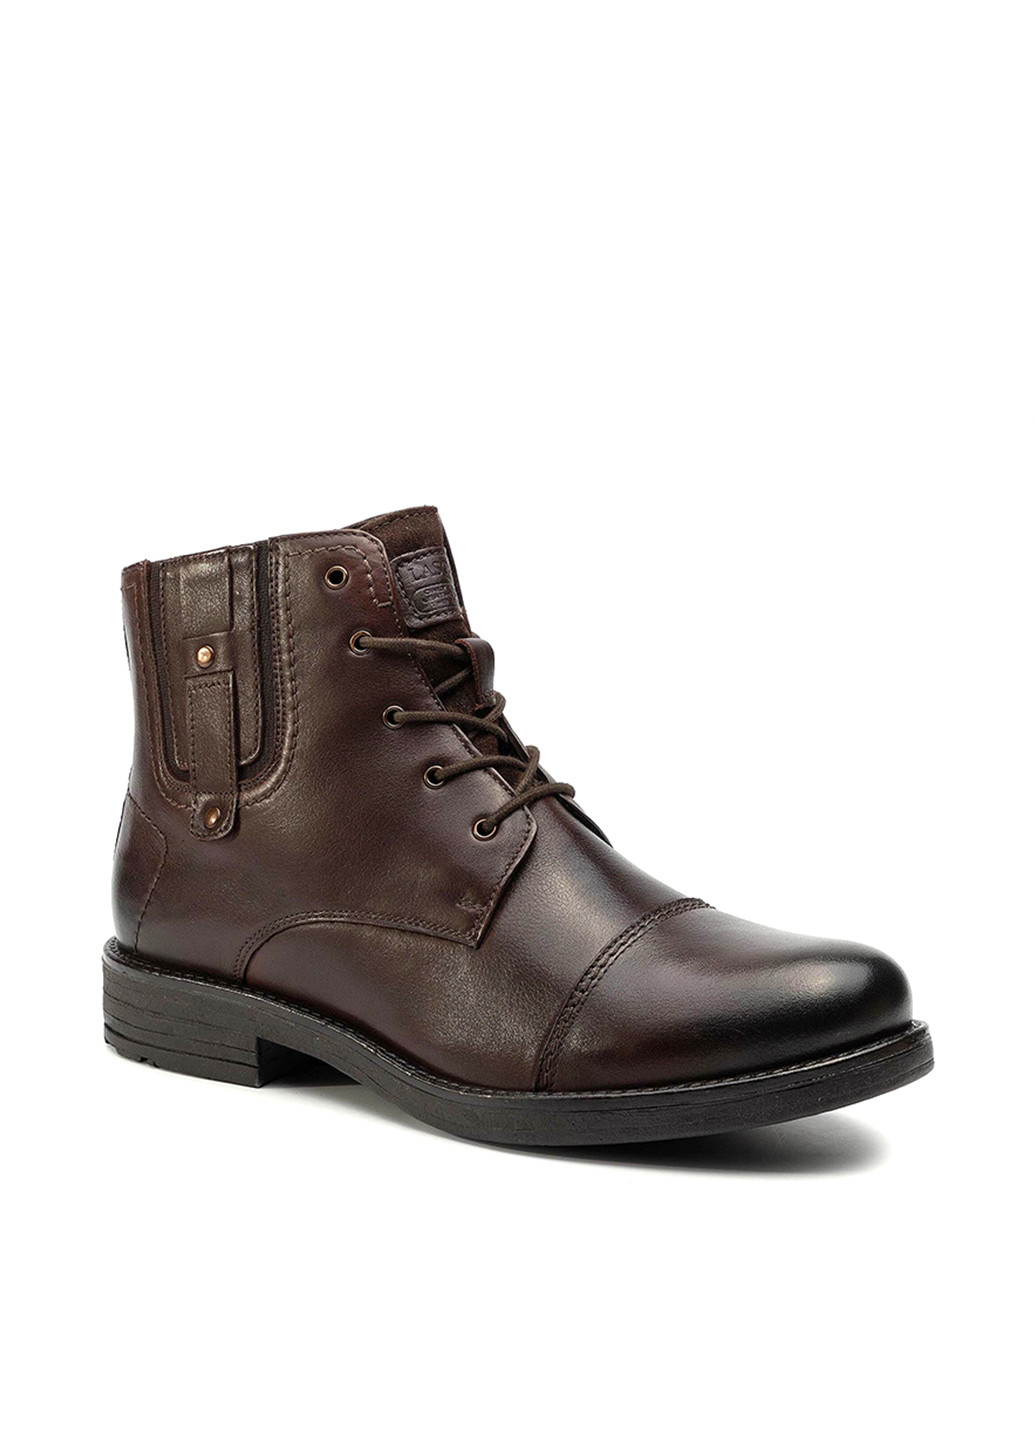 Темно-коричневые зимние чоботи mi08-c608-586-02 Lasocki for men